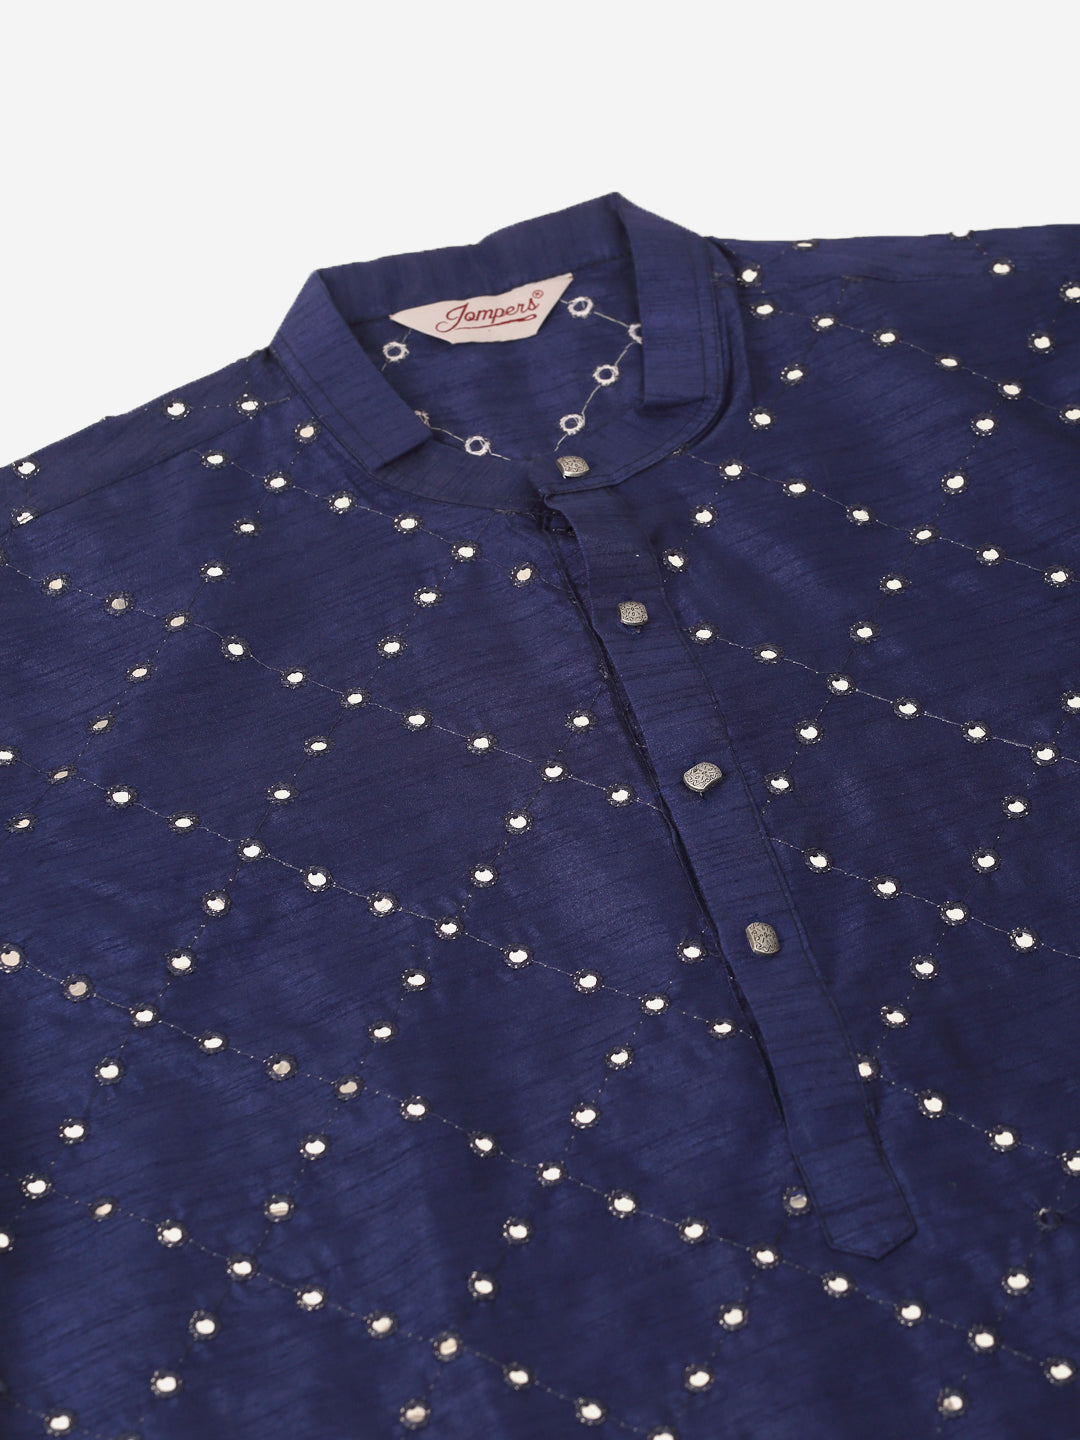 Men's Navy Blue Mirror Work Kurta Pyjama ( Jokp 659 Navy ) - Virat Fashions